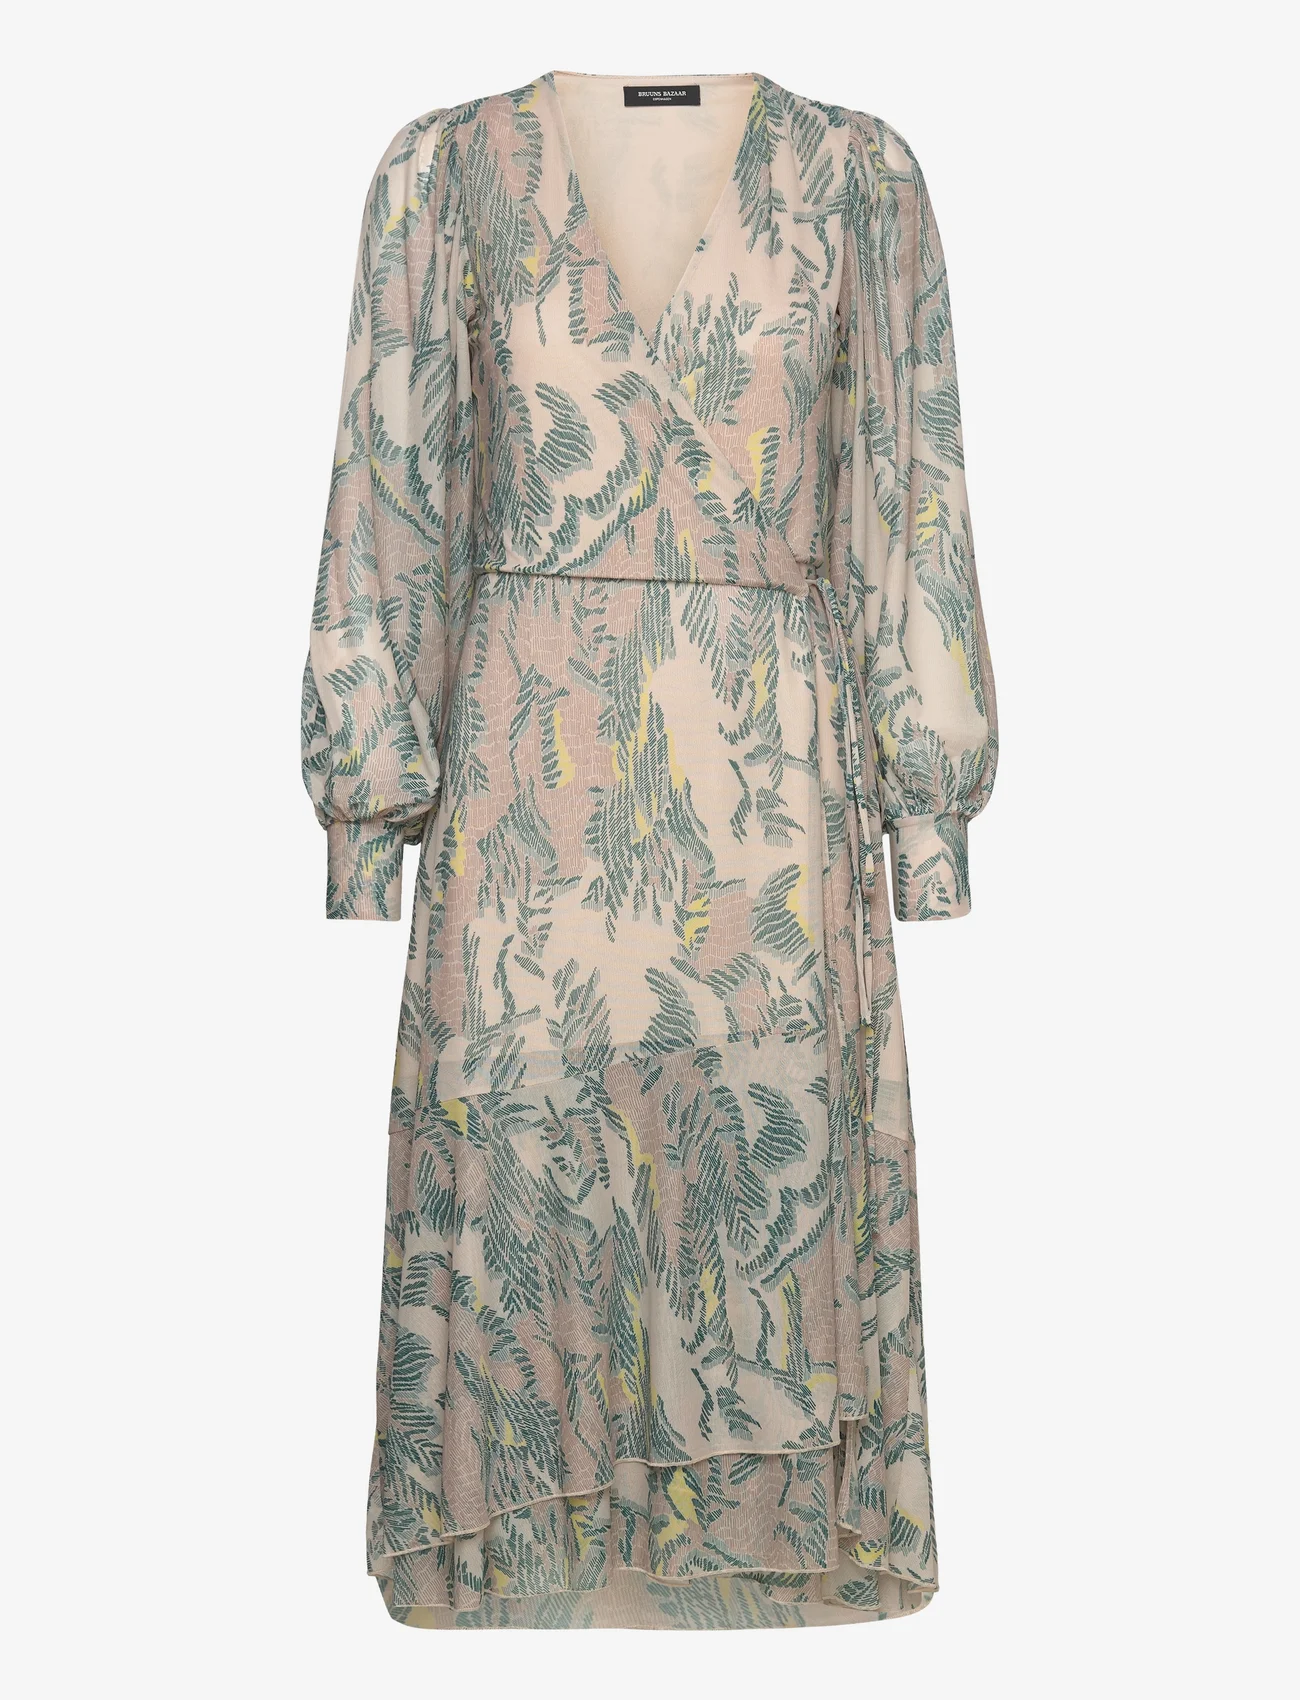 Bruuns Bazaar - PhloxBBNora dress - hõlmikkleidid - beige print - 0